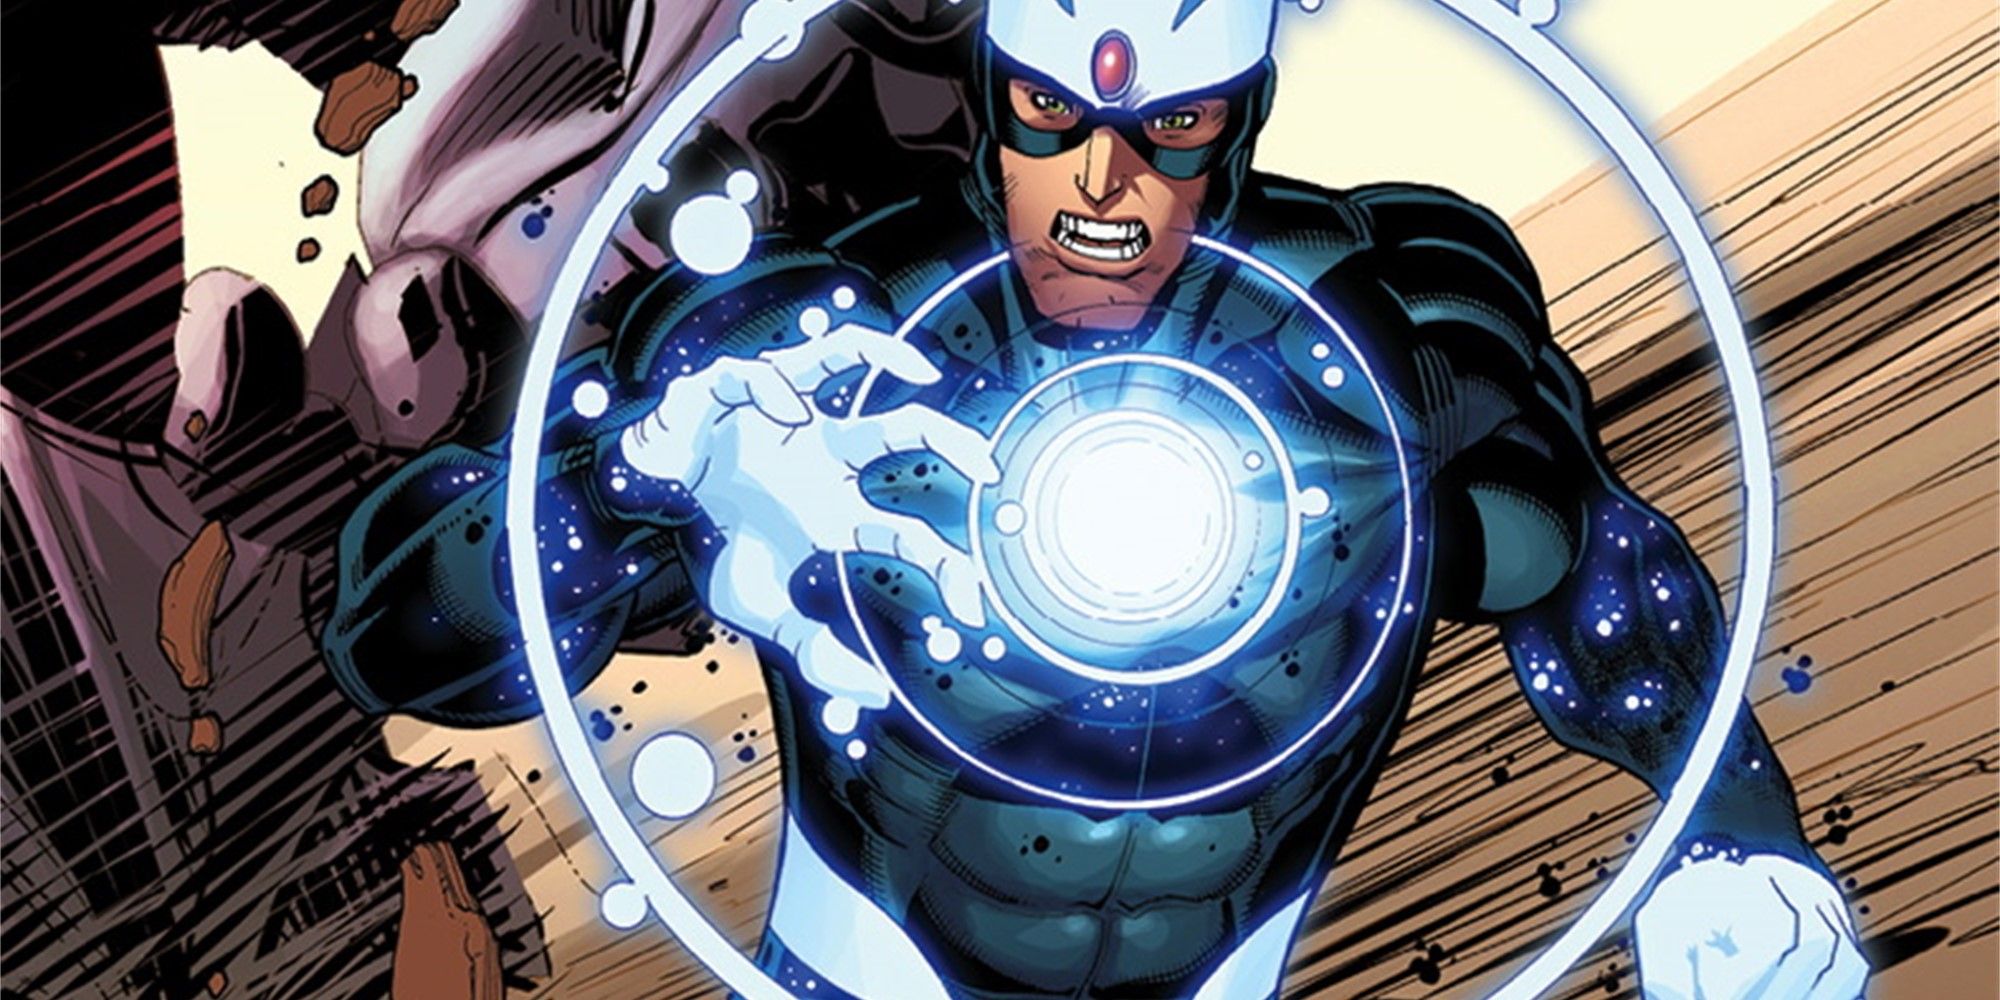 Havok of the X-Men charging up his powers